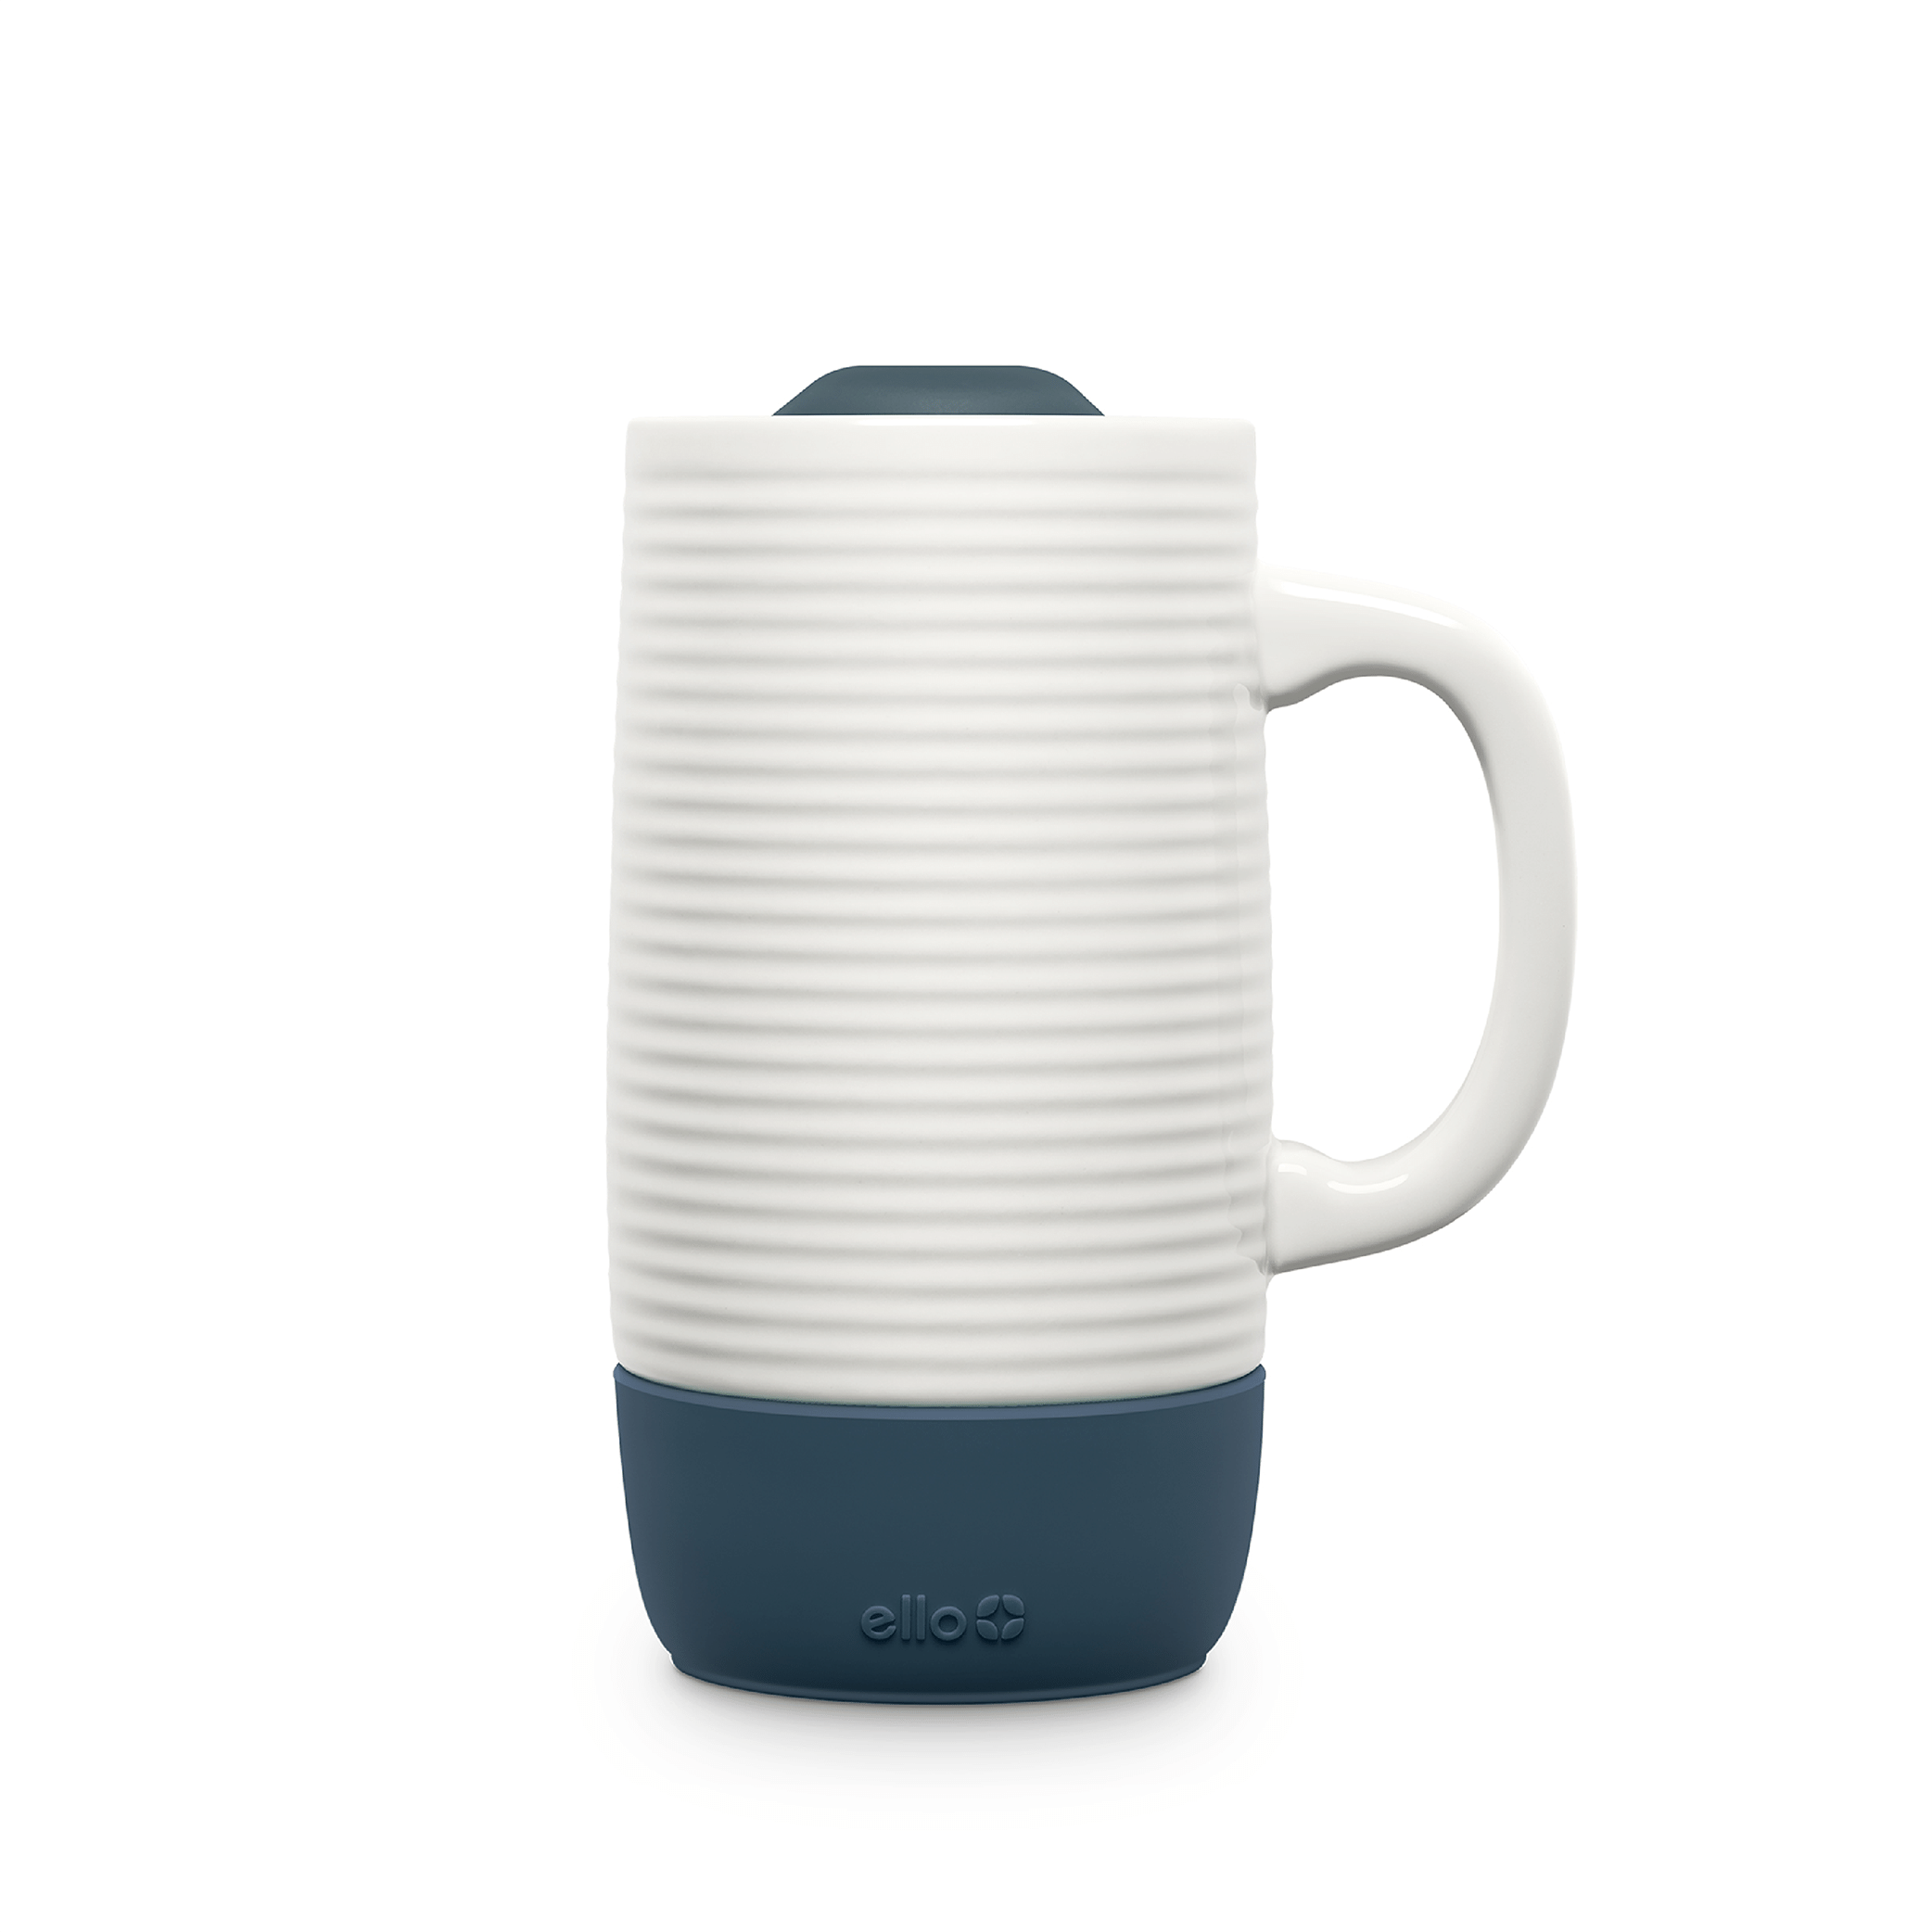 18 Oz Coffee Mug Set Of 6, 18 Ounces Large Microwavable Porcelain